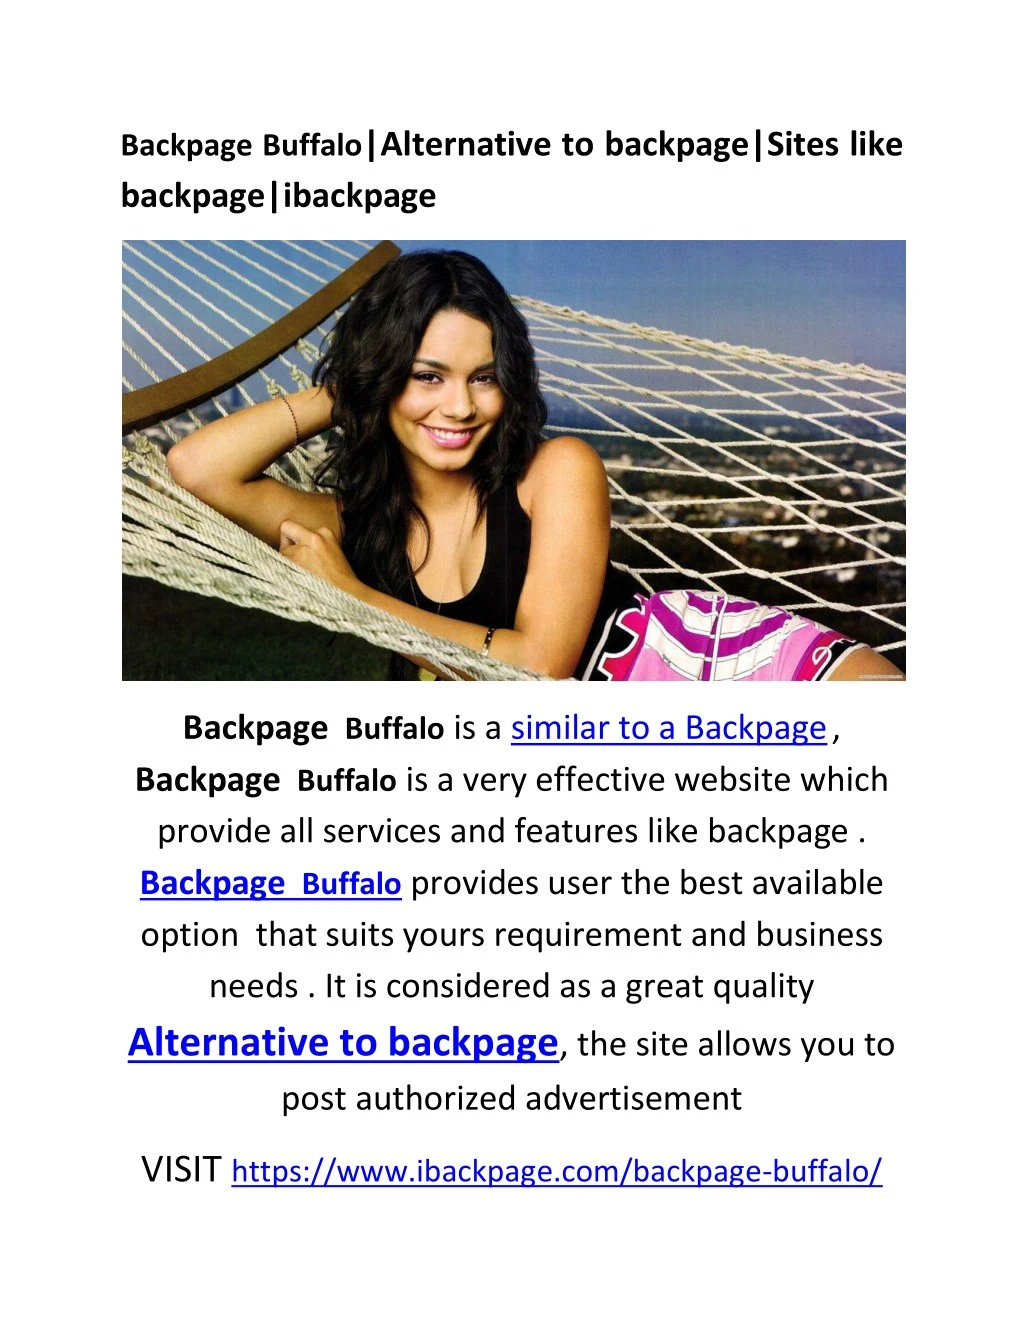 backpage buffalo alternative to backpage sites